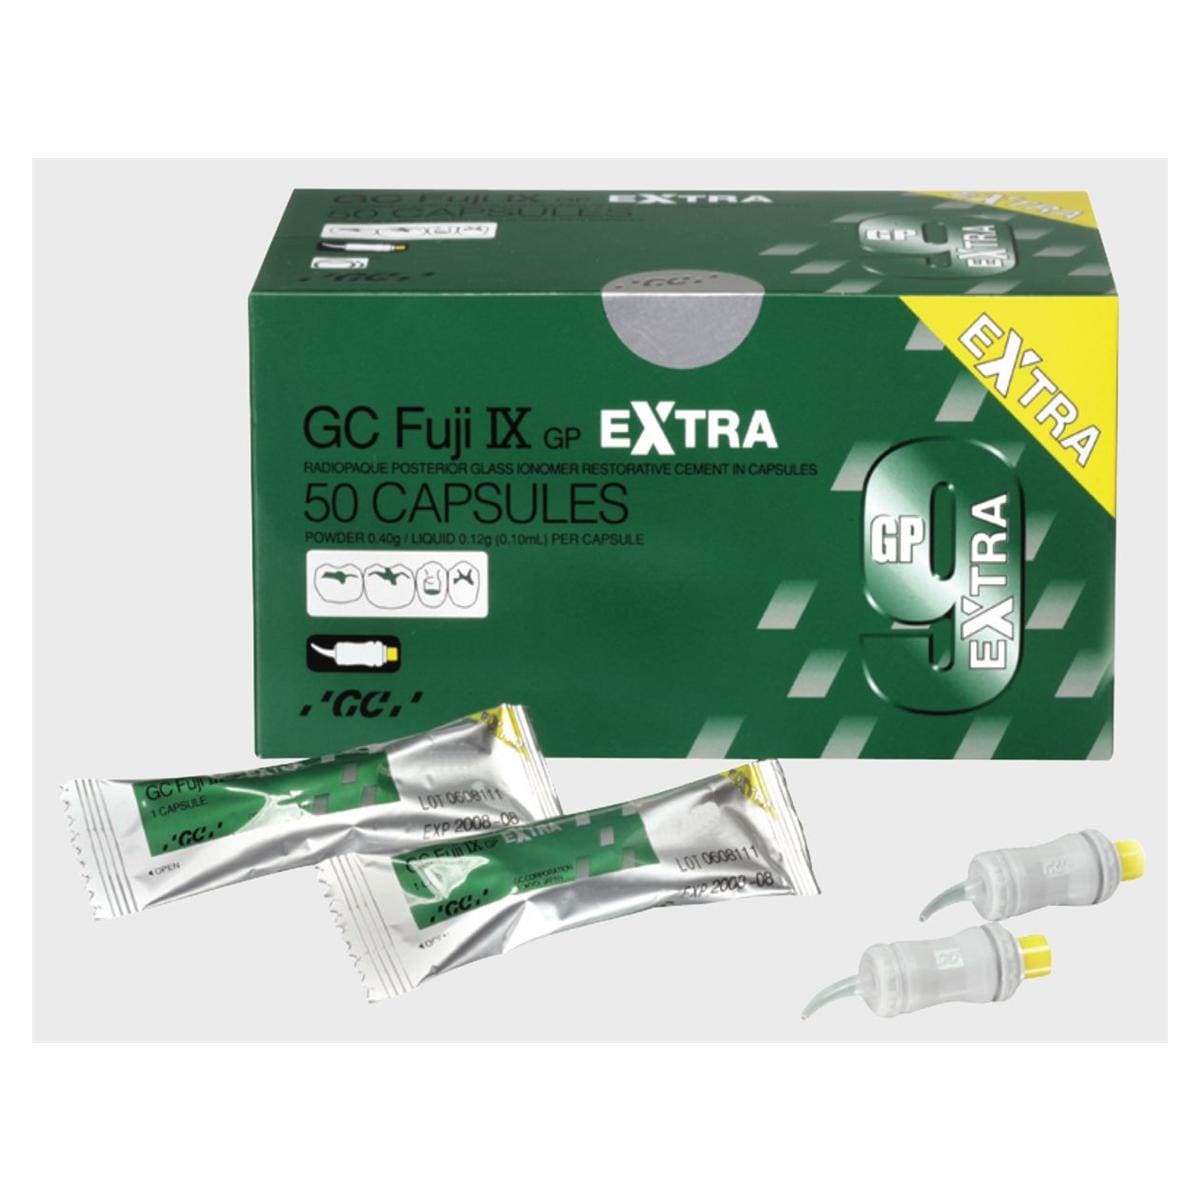 Fuji IX 9 GP Extra GI Capsules B3 50pk